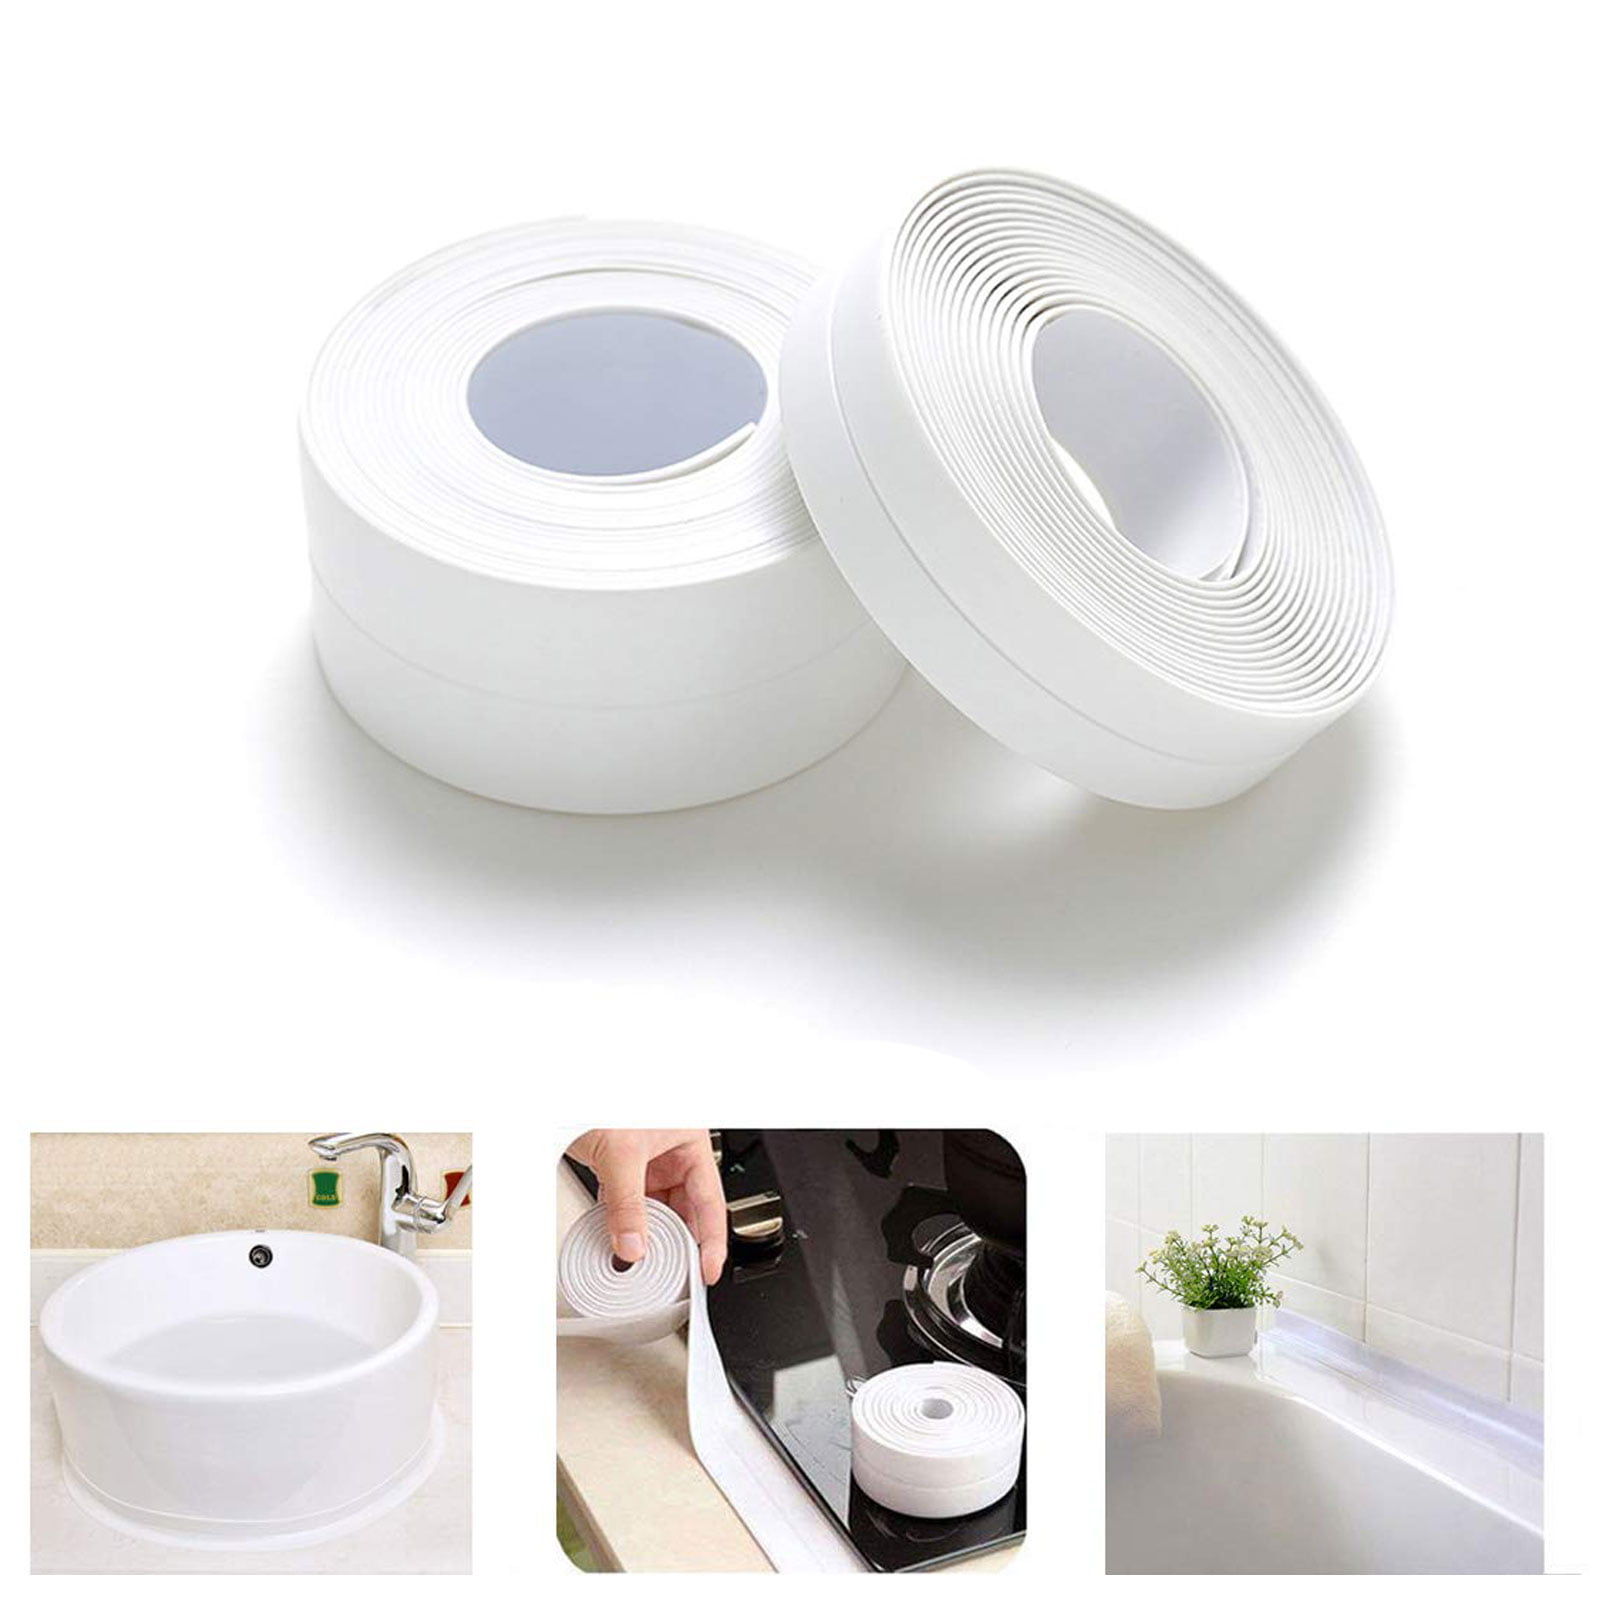 Tape Caulk Strip Waterproof Flexible Self Adhesive Sealing Tape for Kitchen Bathroom Tub Shower Floor Wall Edge Protector 1.5 x 10.5 White